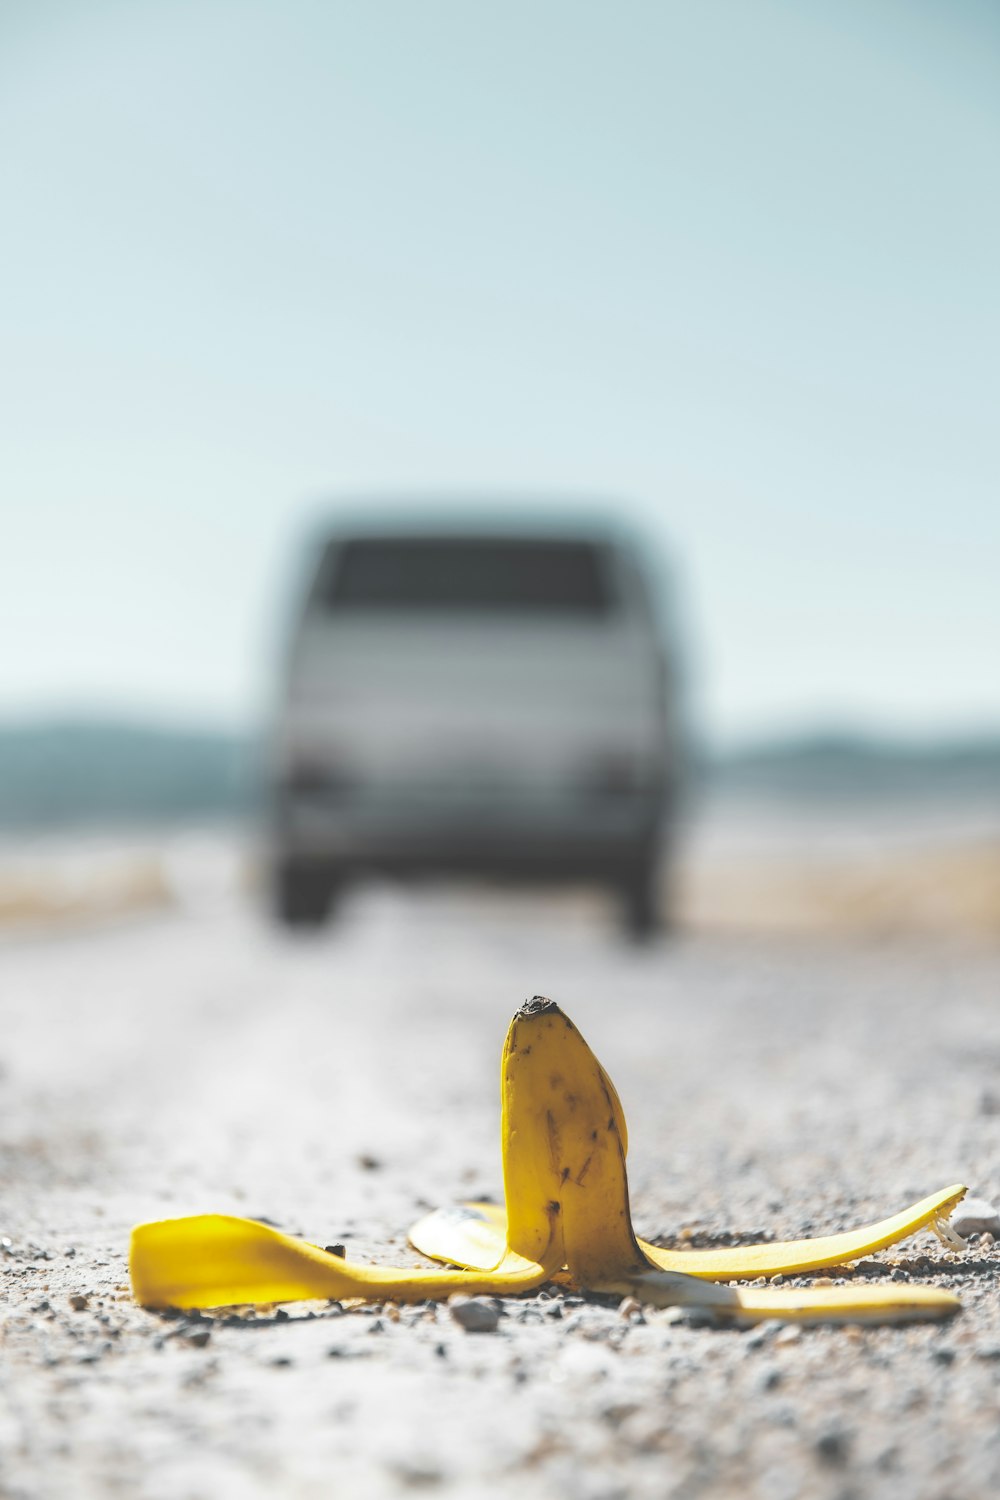 yellow banana peel on white sand during daytime